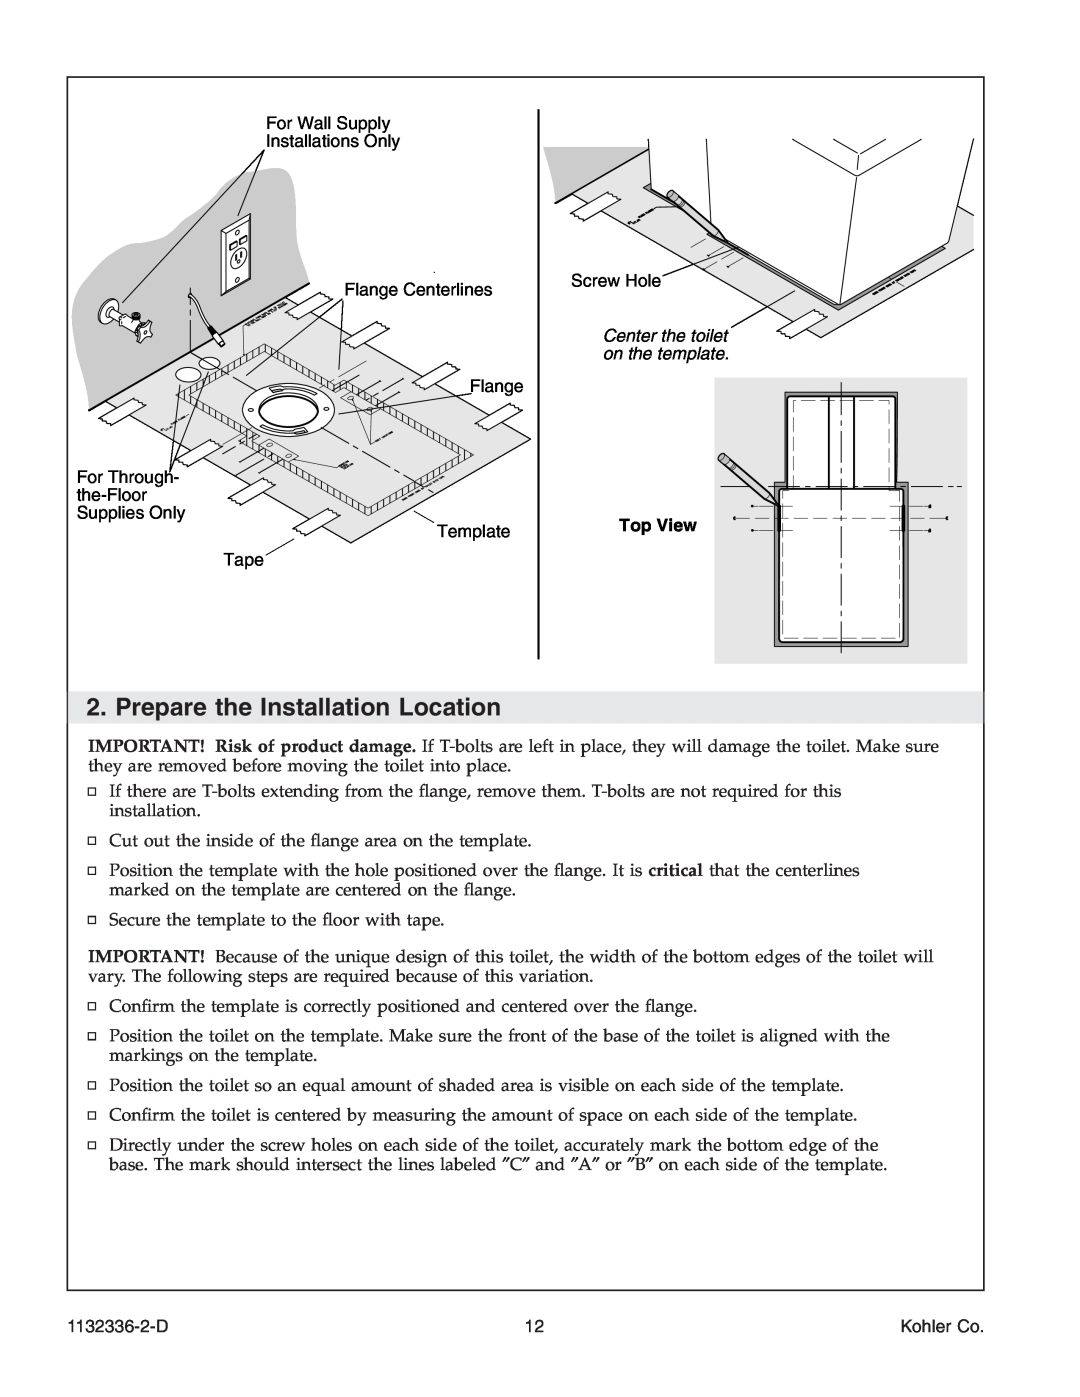 Kohler K-3900 manual Prepare the Installation Location, Center the toilet on the template, Top View, 1132336-2-D, Kohler Co 